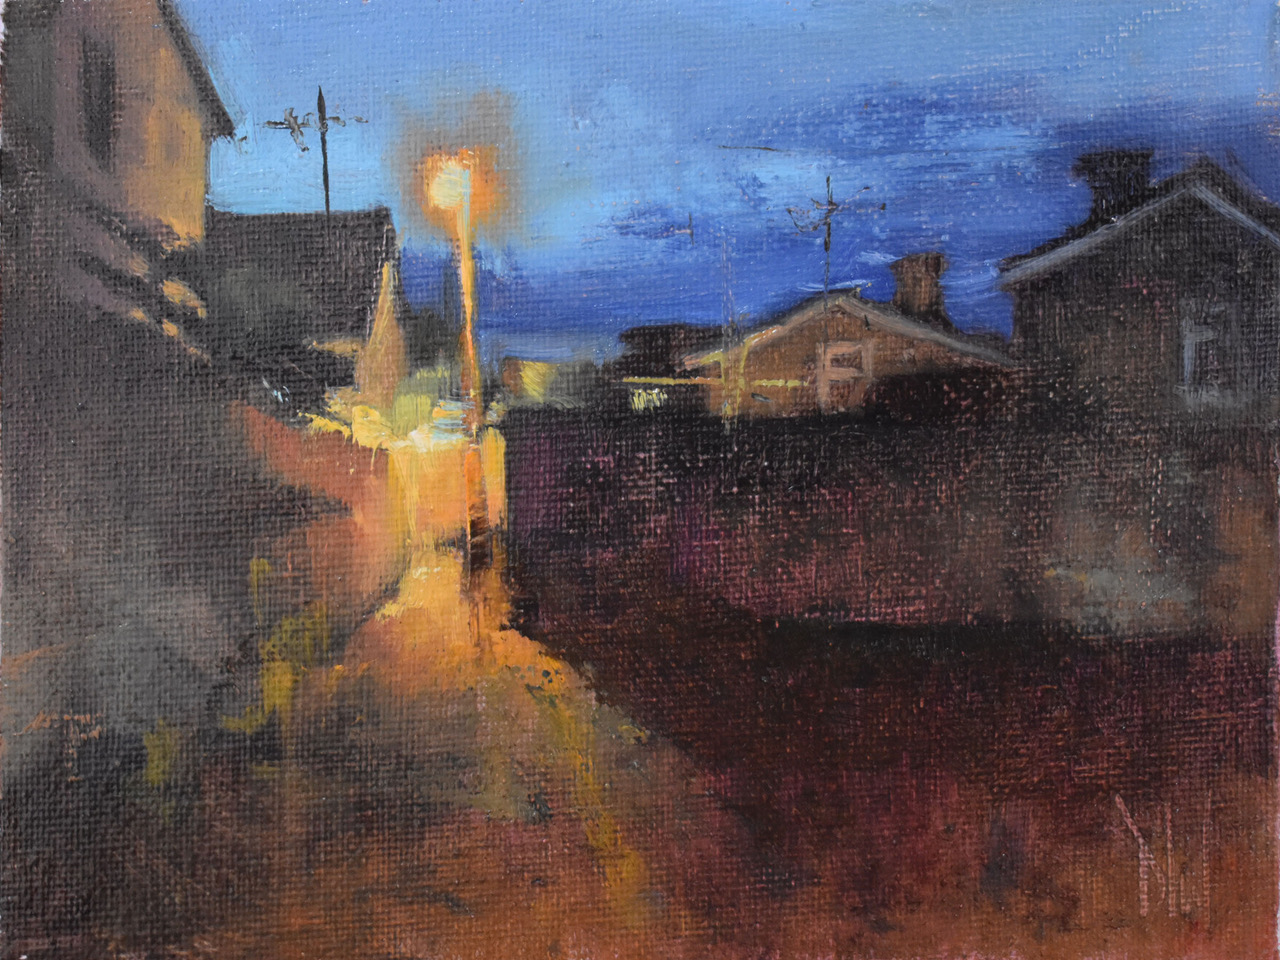 Street corner nocturne (II) by Dave West